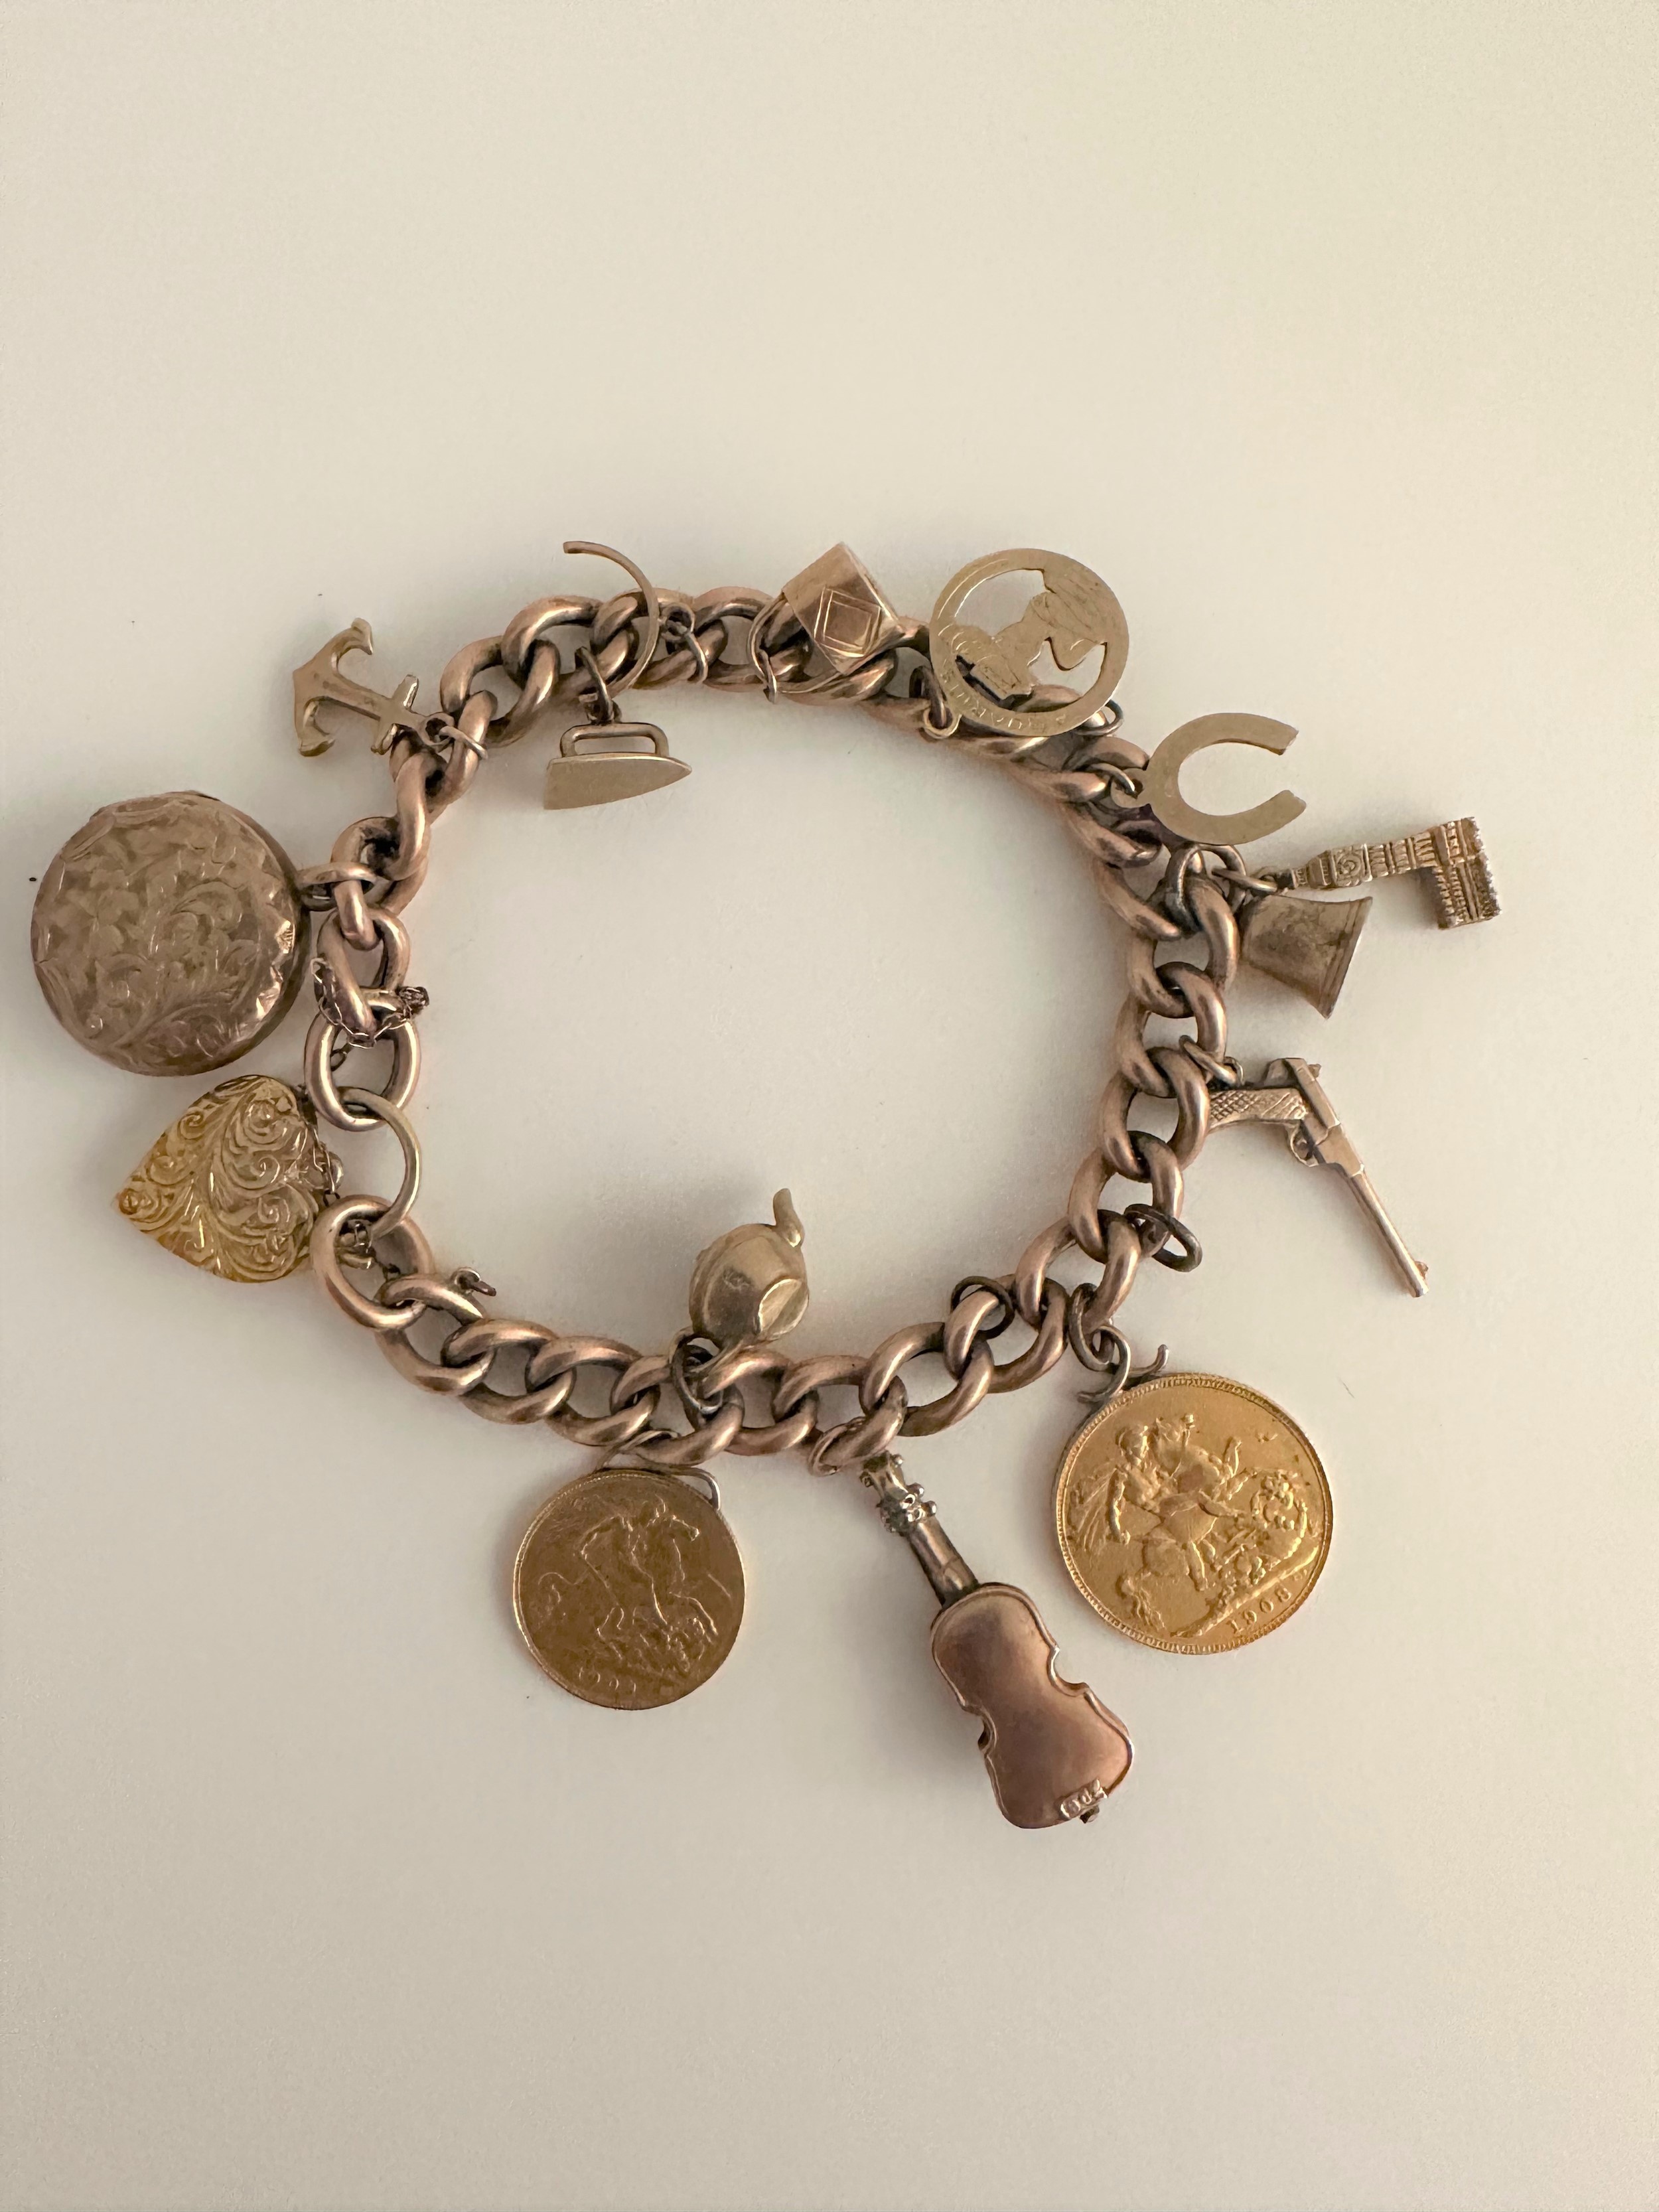 A 9 carat rose gold curb link charm bracelet with engraved heart padlock clasp. Bracelet has 13